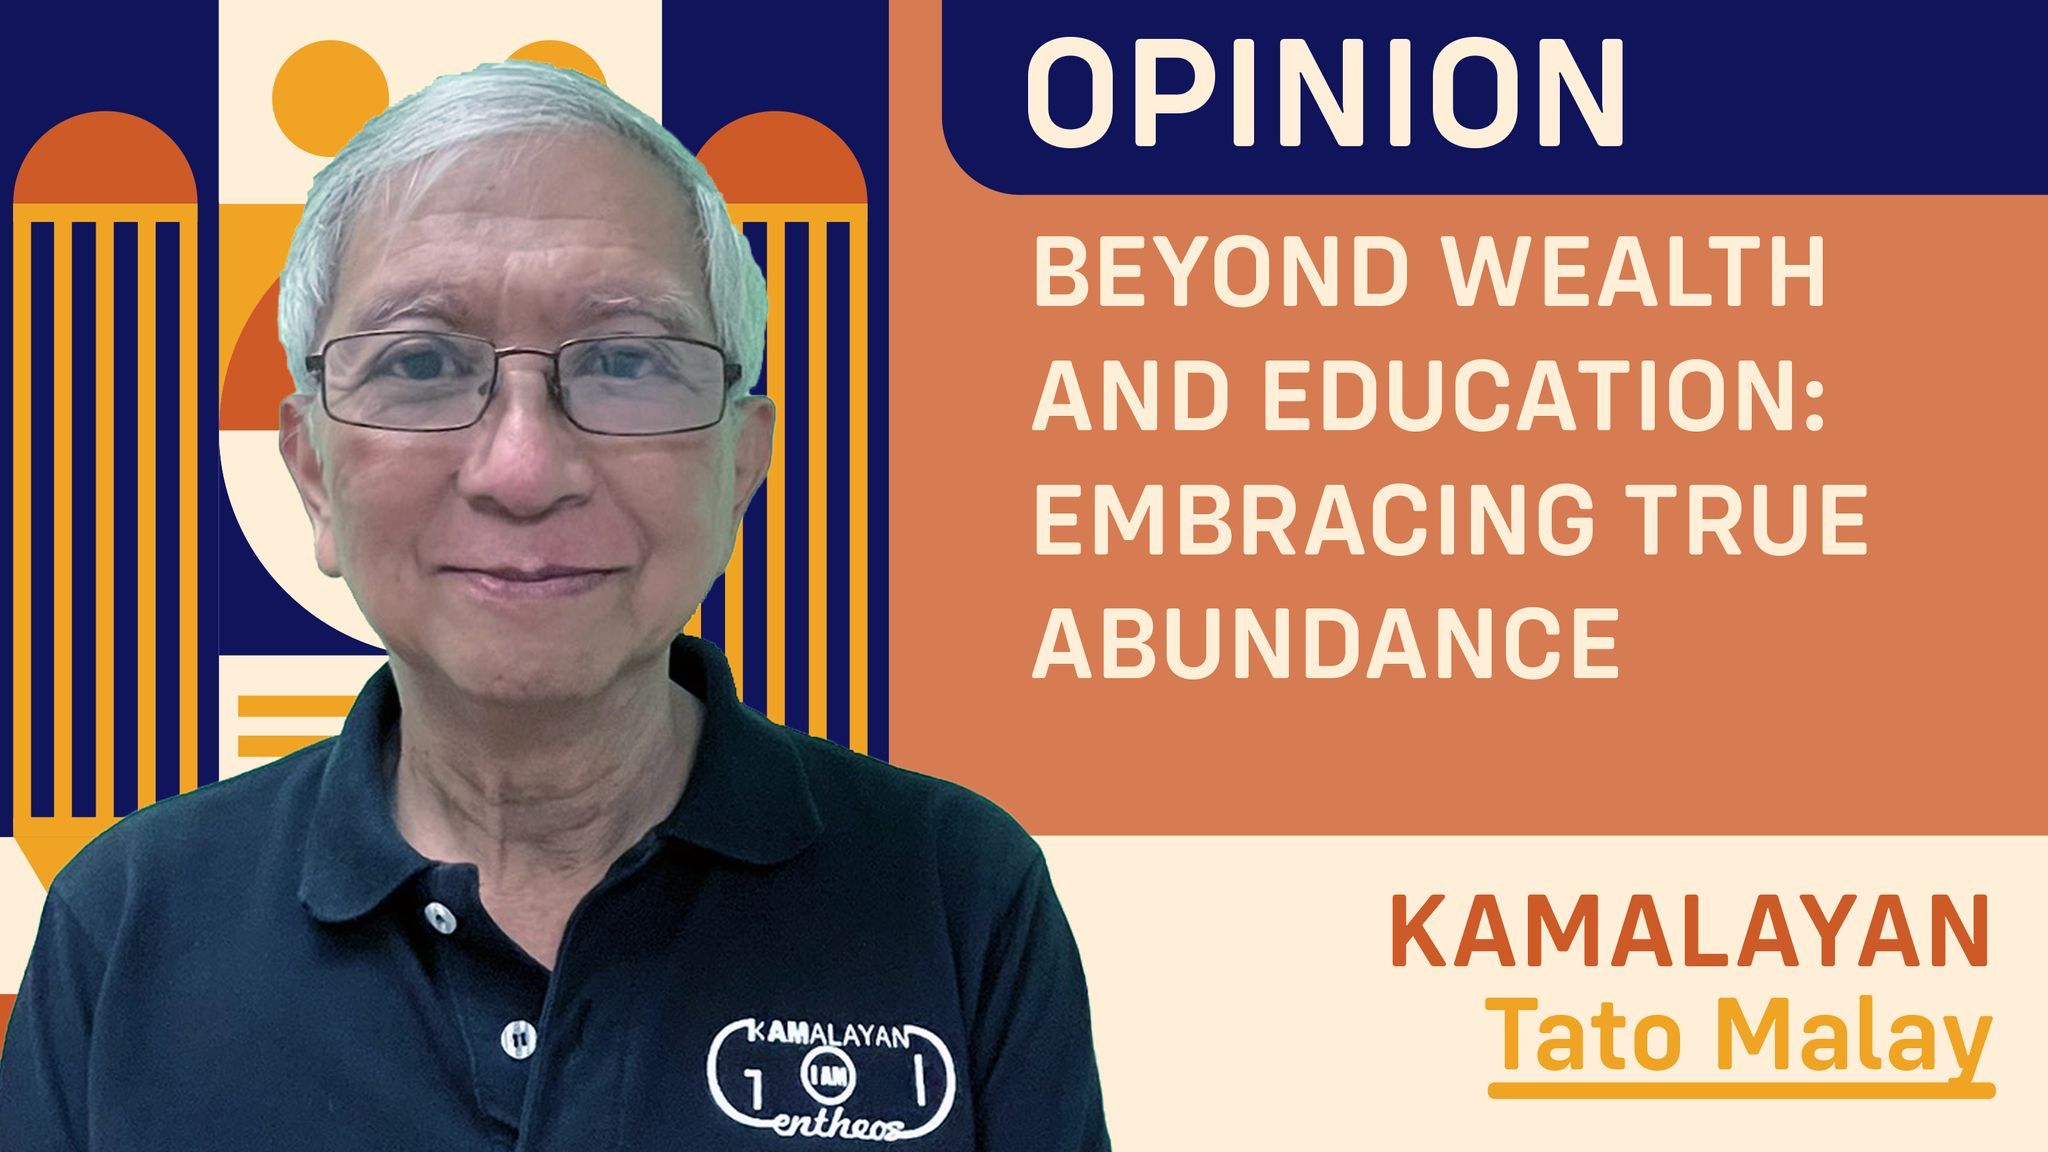 Beyond wealth and education: embracing true abundance